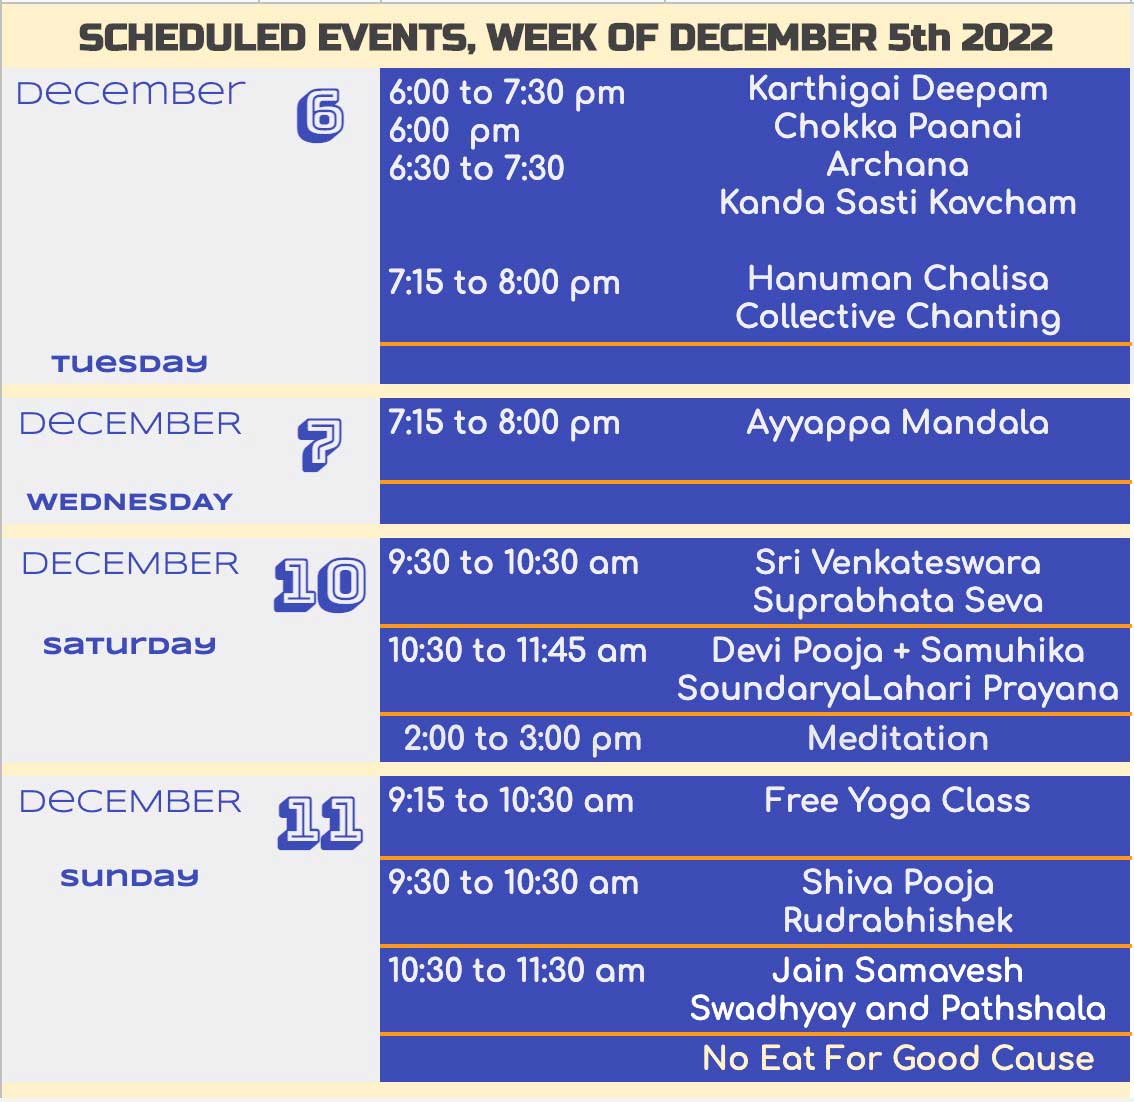 SCHEDULED EVENTS, WEEK OF DECEMBER 5th 2022 DeCemBer 6:00 to 7:30 pm Karthigai Deepam 6:00 pm Chokko Poonai 6:30 to 7:30 Archana Kanda Sasti Kavcham 7:15 to 8:00 pm 7:15 to 8:00 pm Hanuman Chalisa Collective Chanting Ayyappa Mandala Tuesday DECEMBER 7 WEDNESDAY DECEMBER 0 Saturday DECEMBER sunday 9:30 to 10:30 am 10:30 to 11:45 am 2:00 to 3:00 pm 11 9:15 to 10:30 am 9:30 to 10:30 am 10:30 to 11:30 am Sri Venkoteswora Suprabhata Seva Devi Pooja + Samuhika SoundaryaLahari Prayana Meditation Free Yoga Class Shiva Pooja Rudrabhishek Join Somavesh Swadhyay and Pathshala No Eat For Good Cause